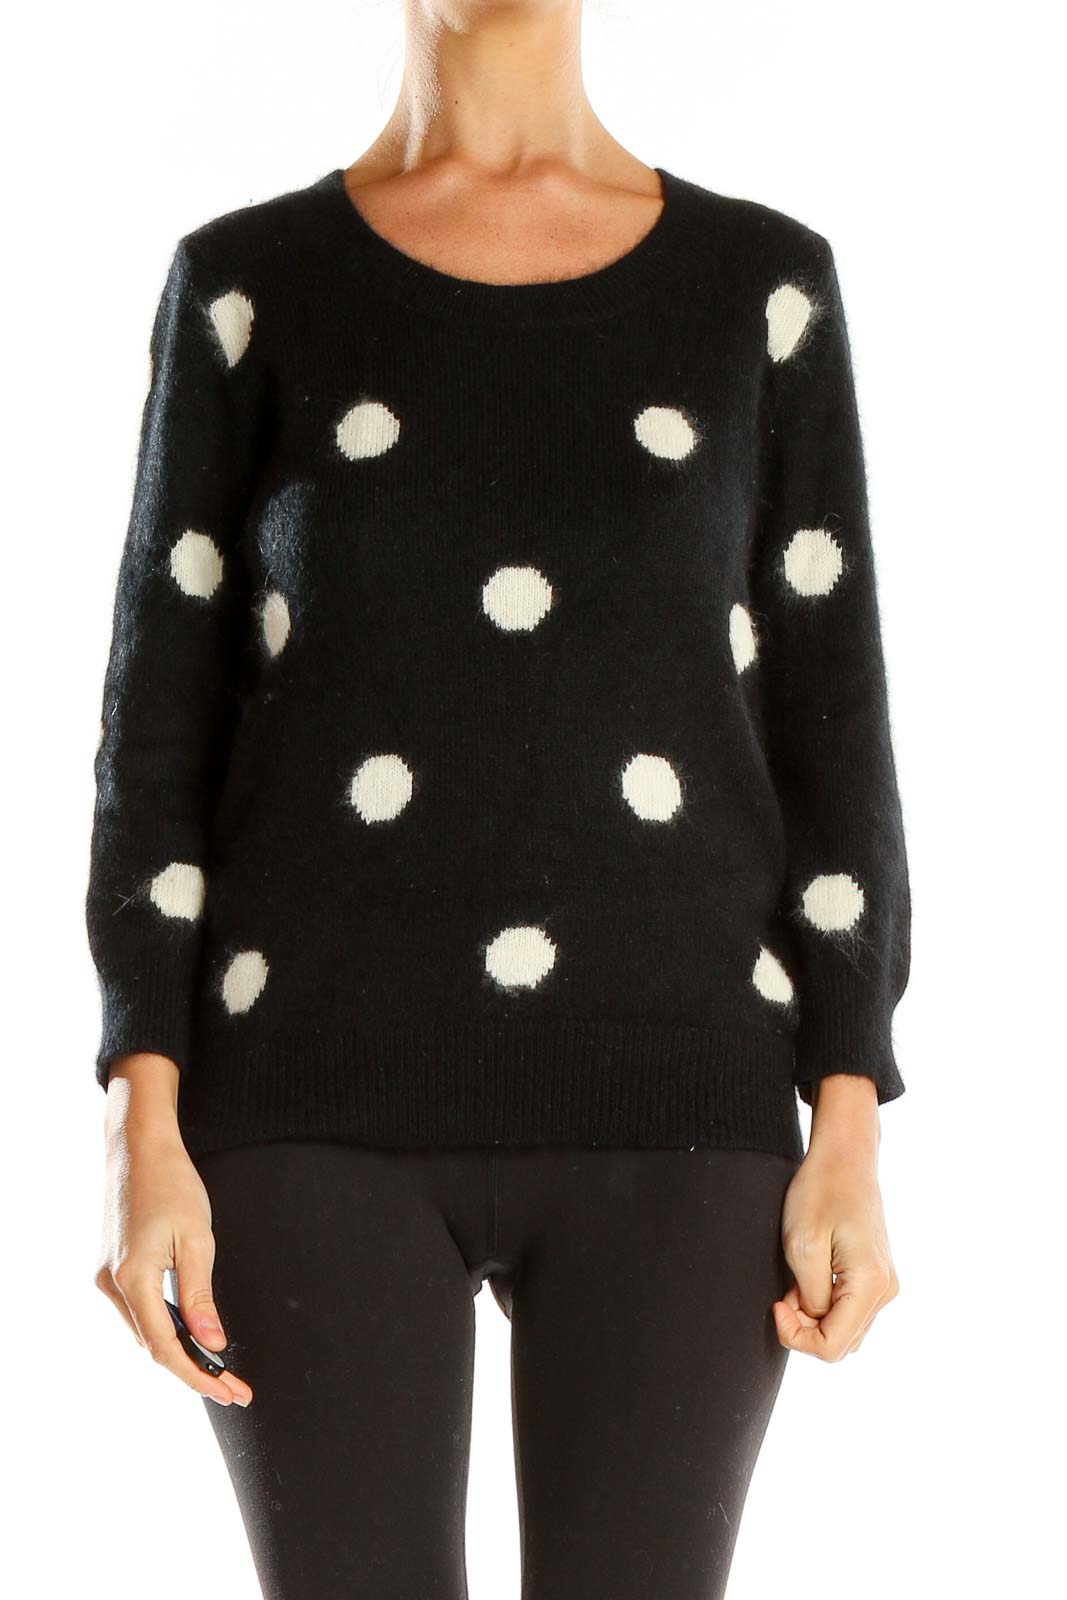 Black Polka Dot Sweater Front